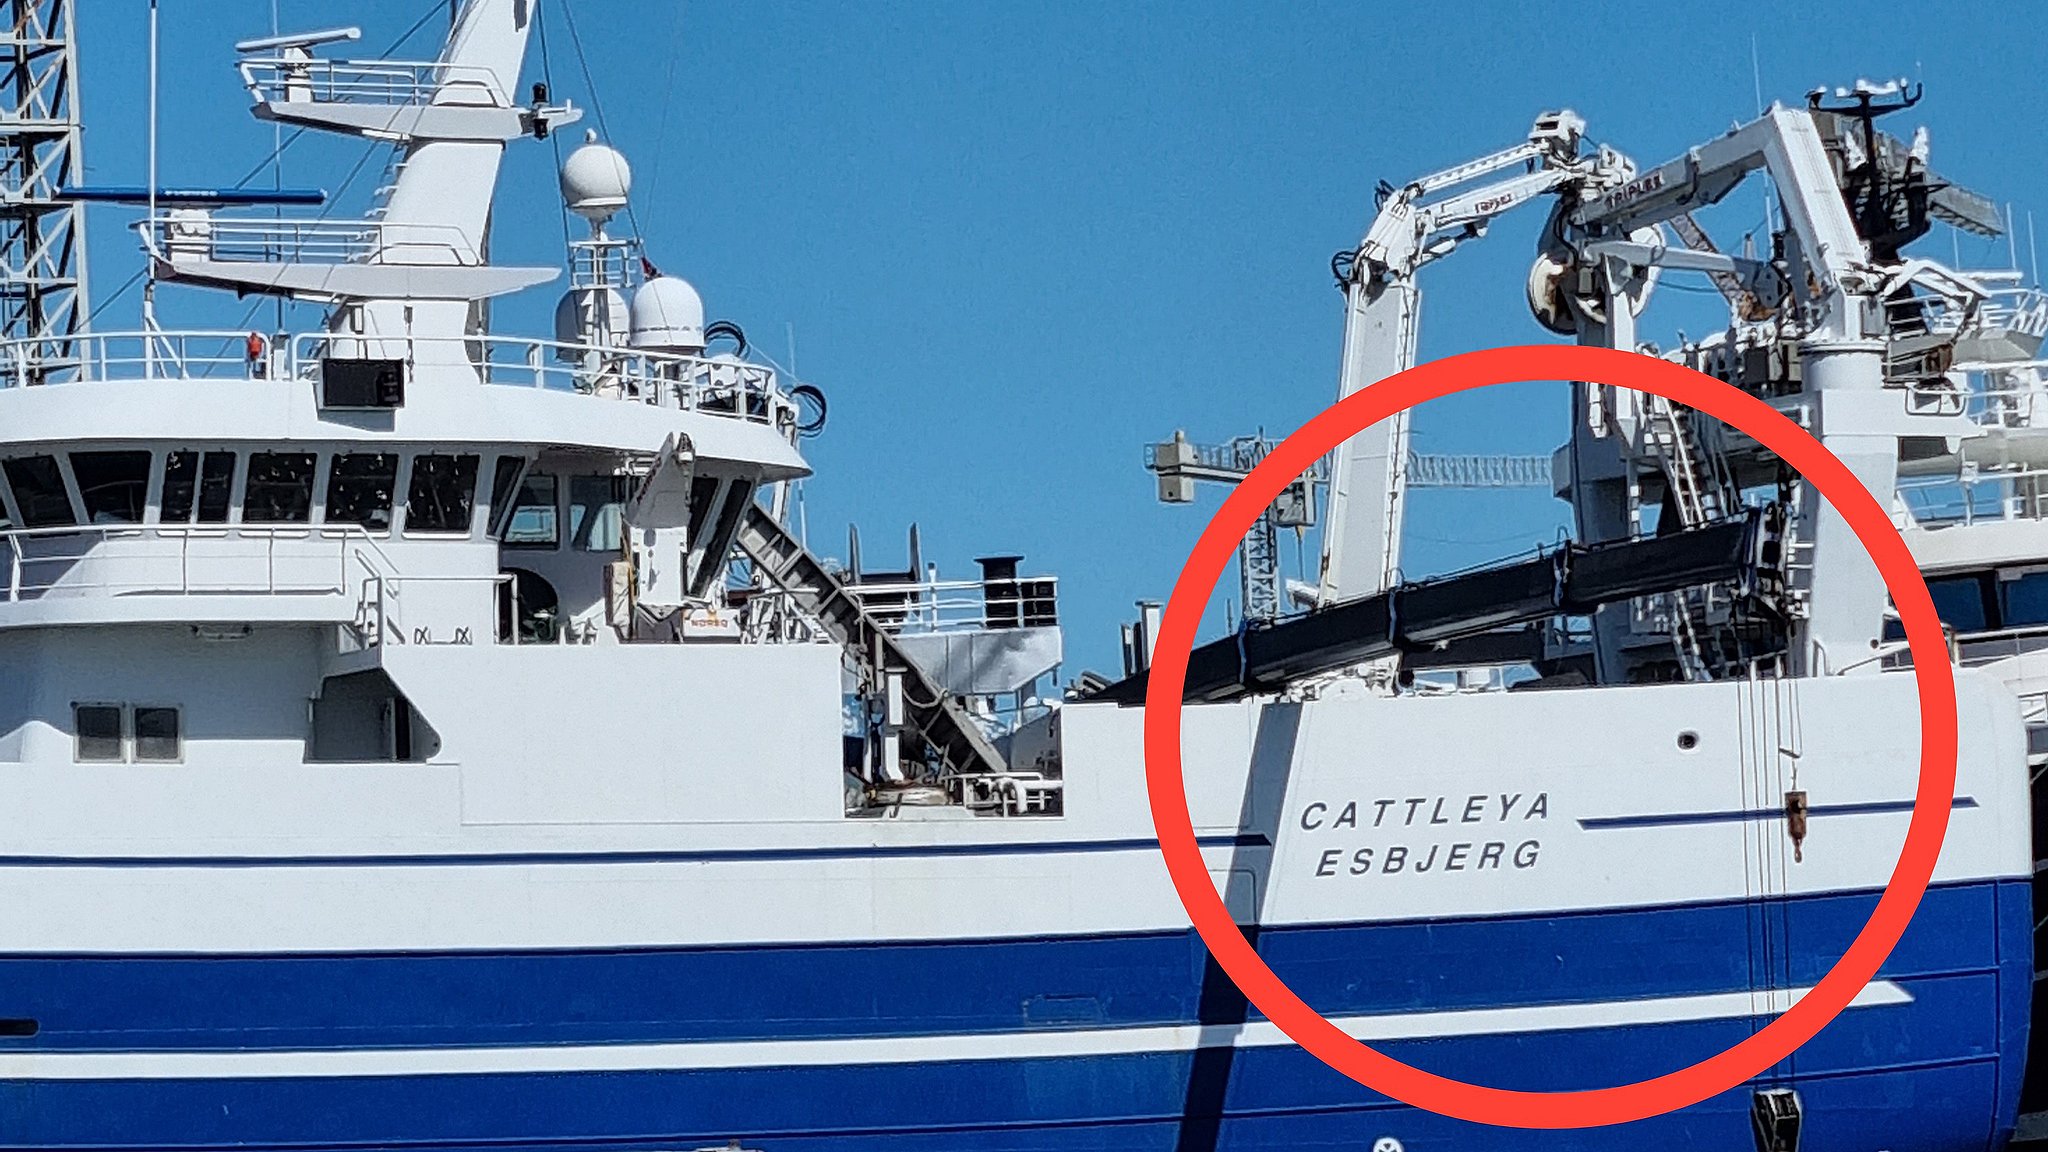 Barnlig Vært for Handel Tonstung kran væltede ned over skib | TV2 Nord